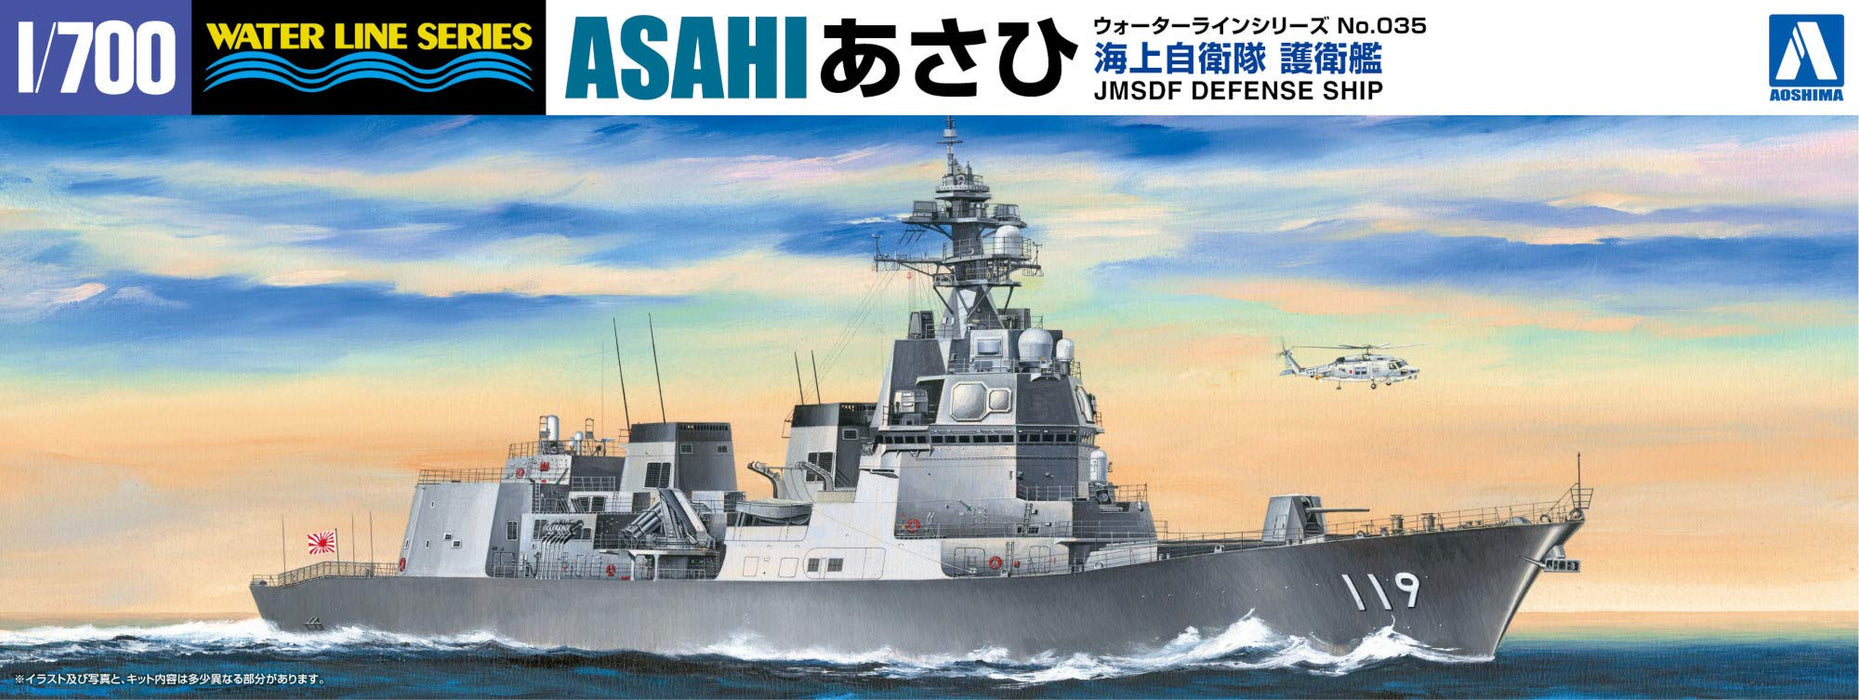 AOSHIMA Waterline 1/700 Jmsdf Défense Destroyer Asahi Dd-119 Modèle en plastique